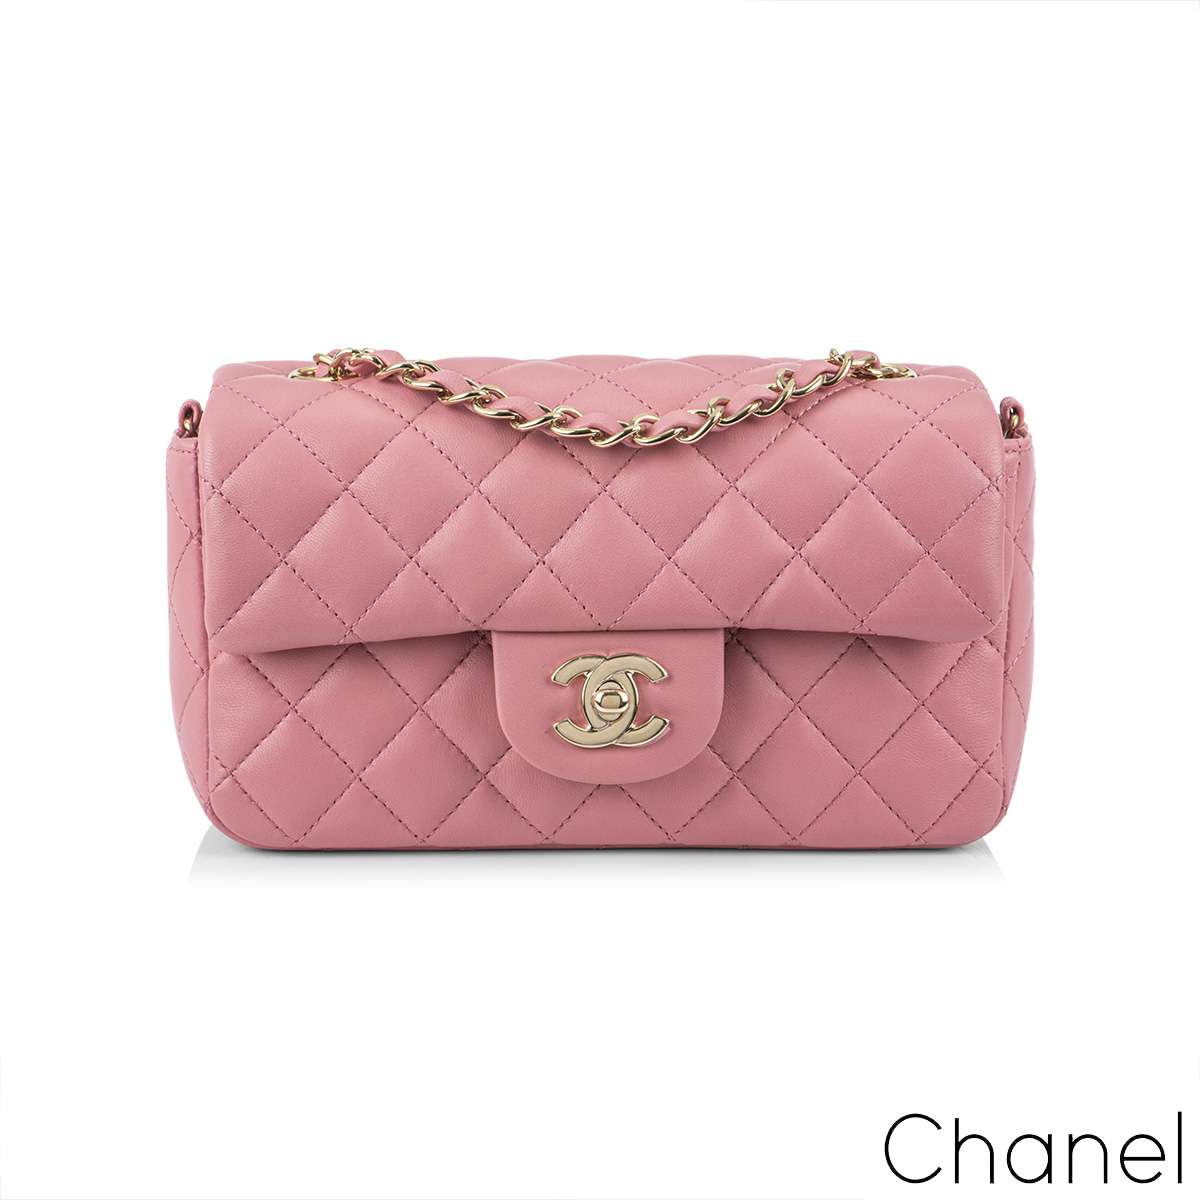 Top 75+ imagen chanel classic pink bag - Abzlocal.mx